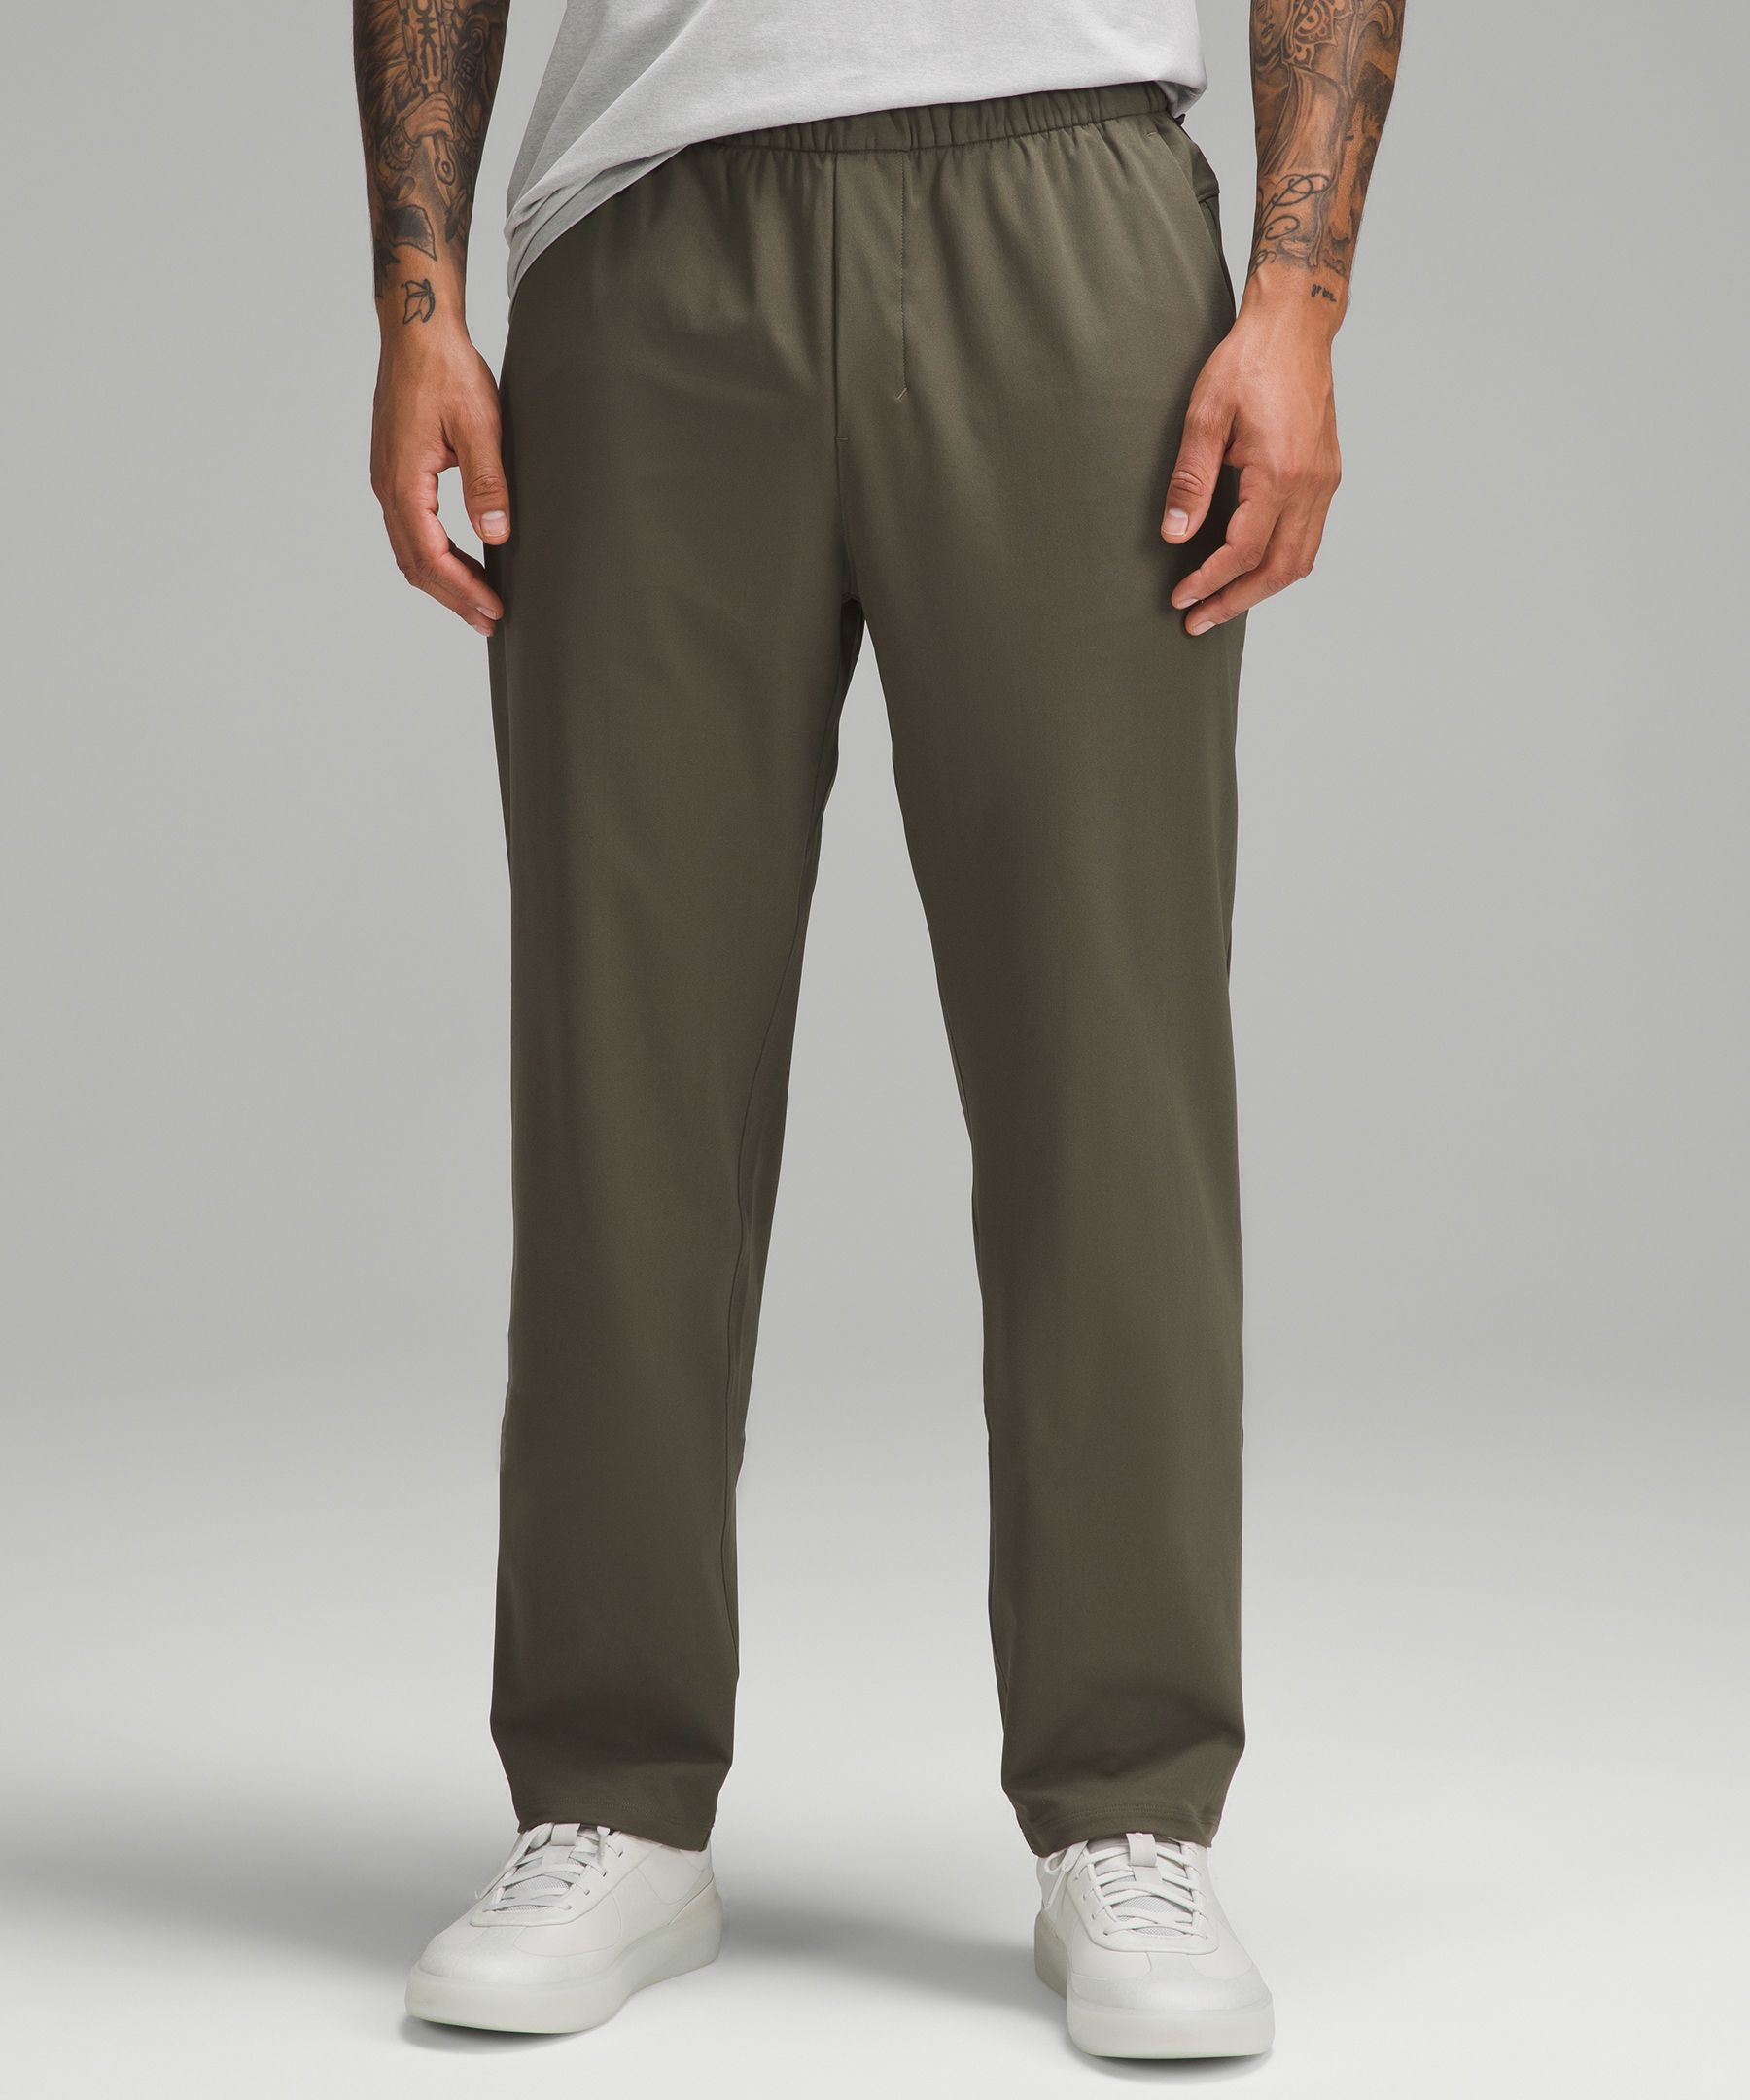 Comfortable Pants for Men | lululemon